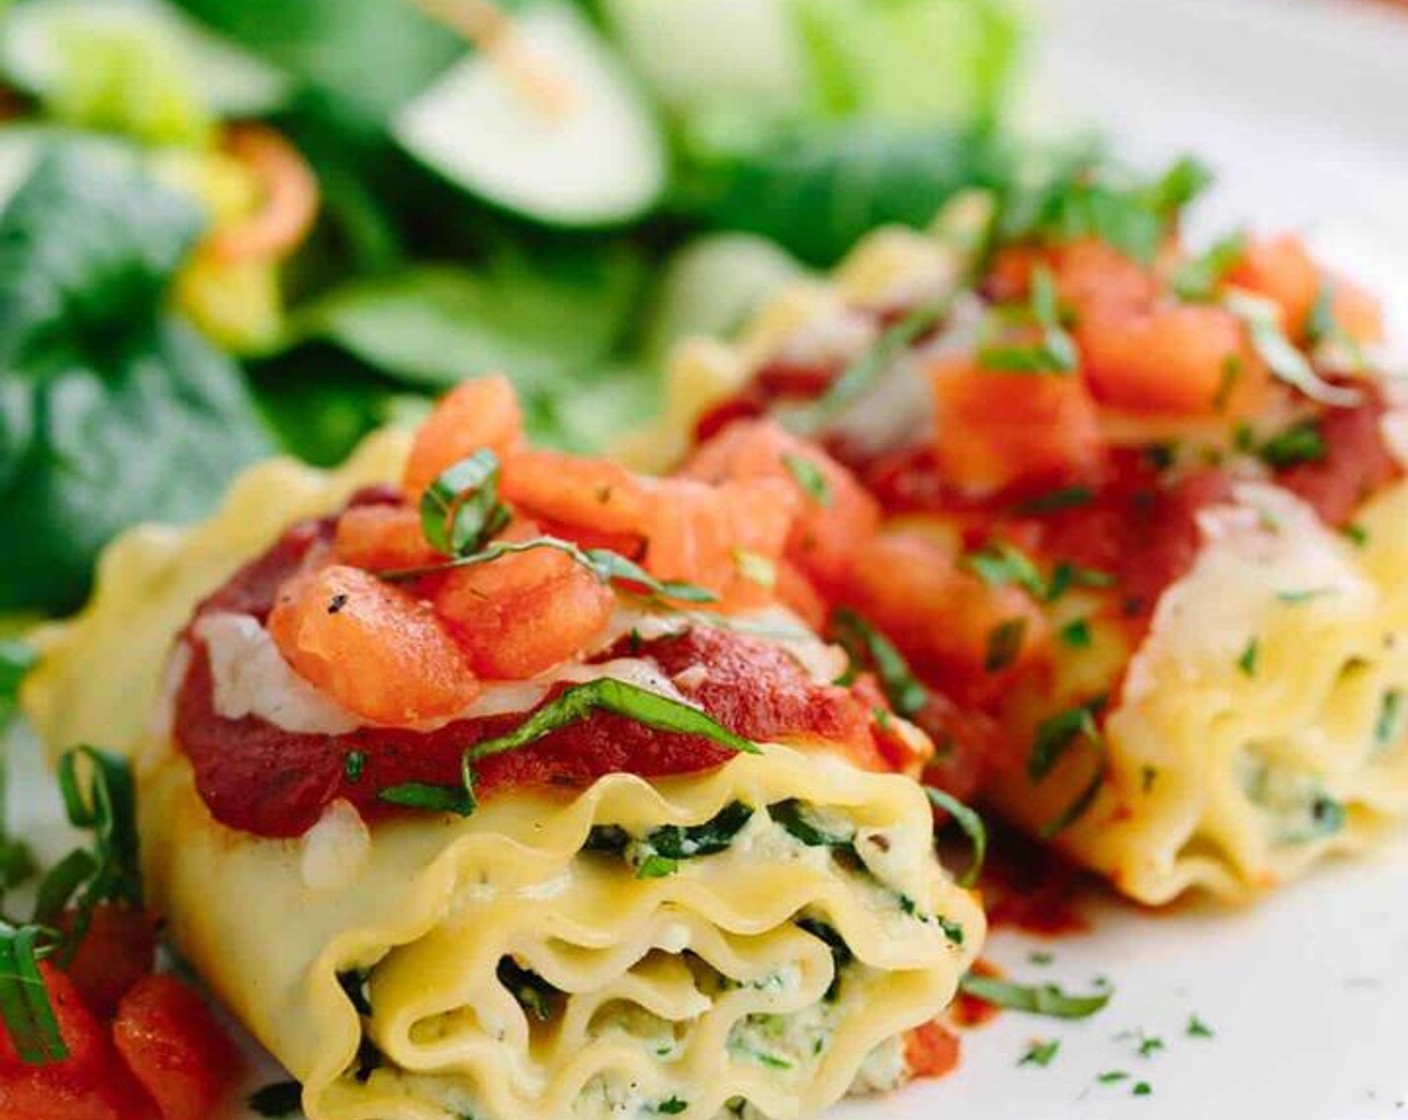 Homemade Italian Lasagna Rolls with Vegetables